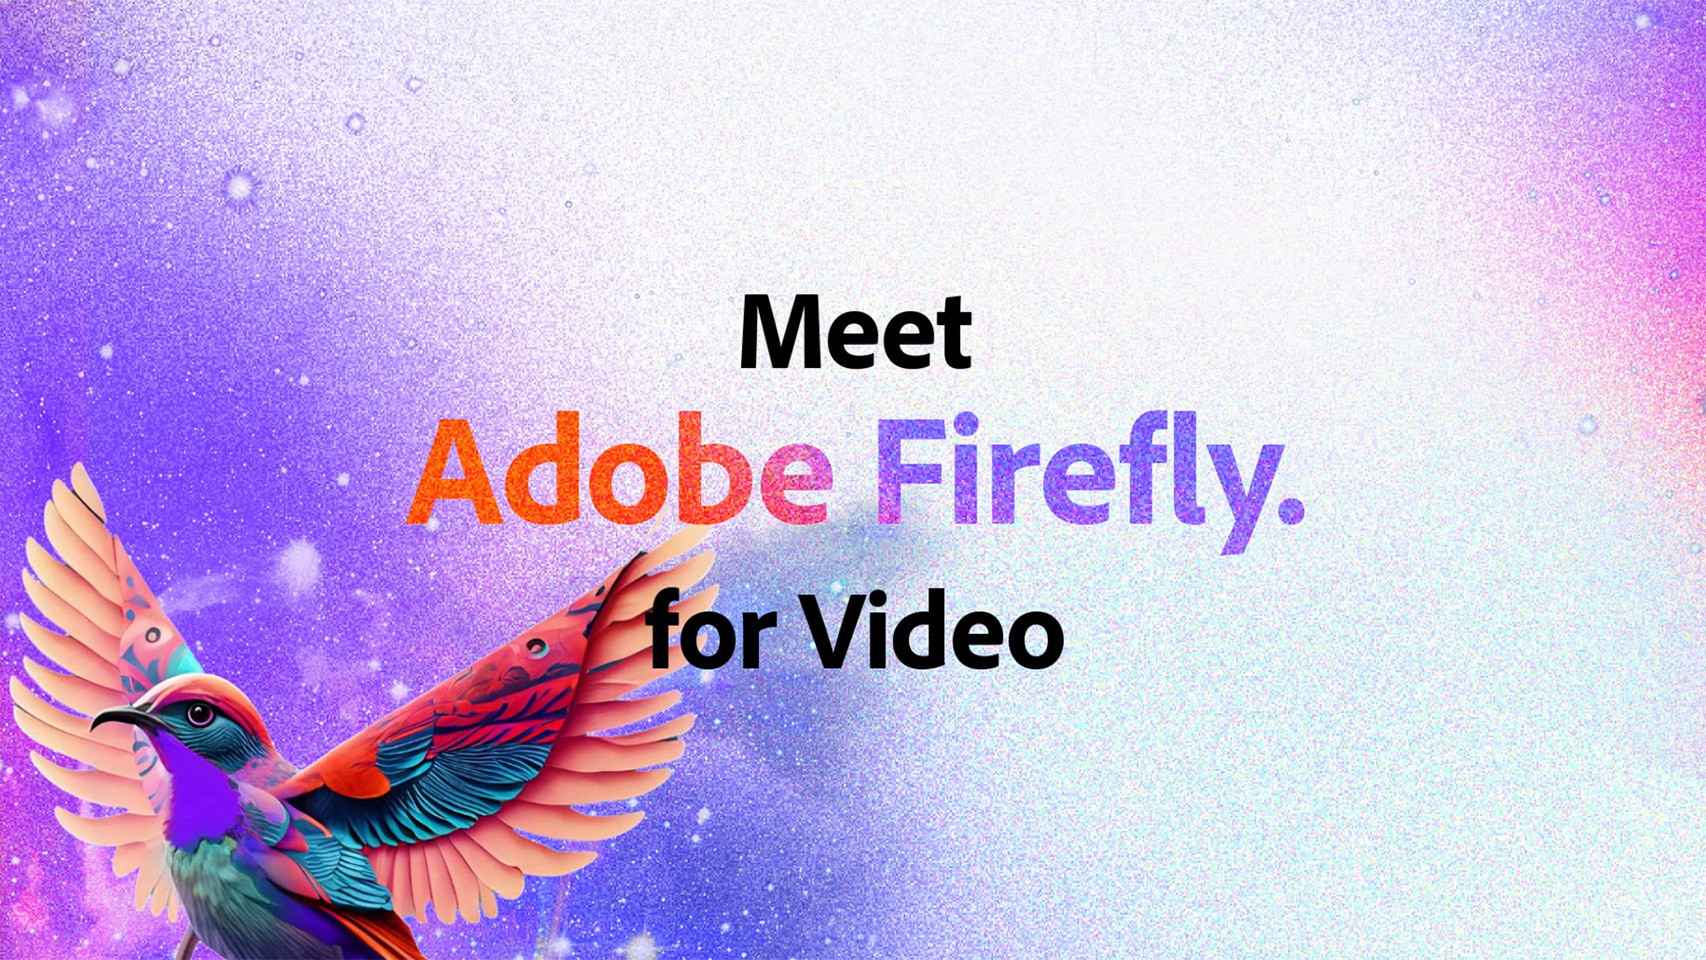 Firefly de Adobe llega al vídeo para crear magia